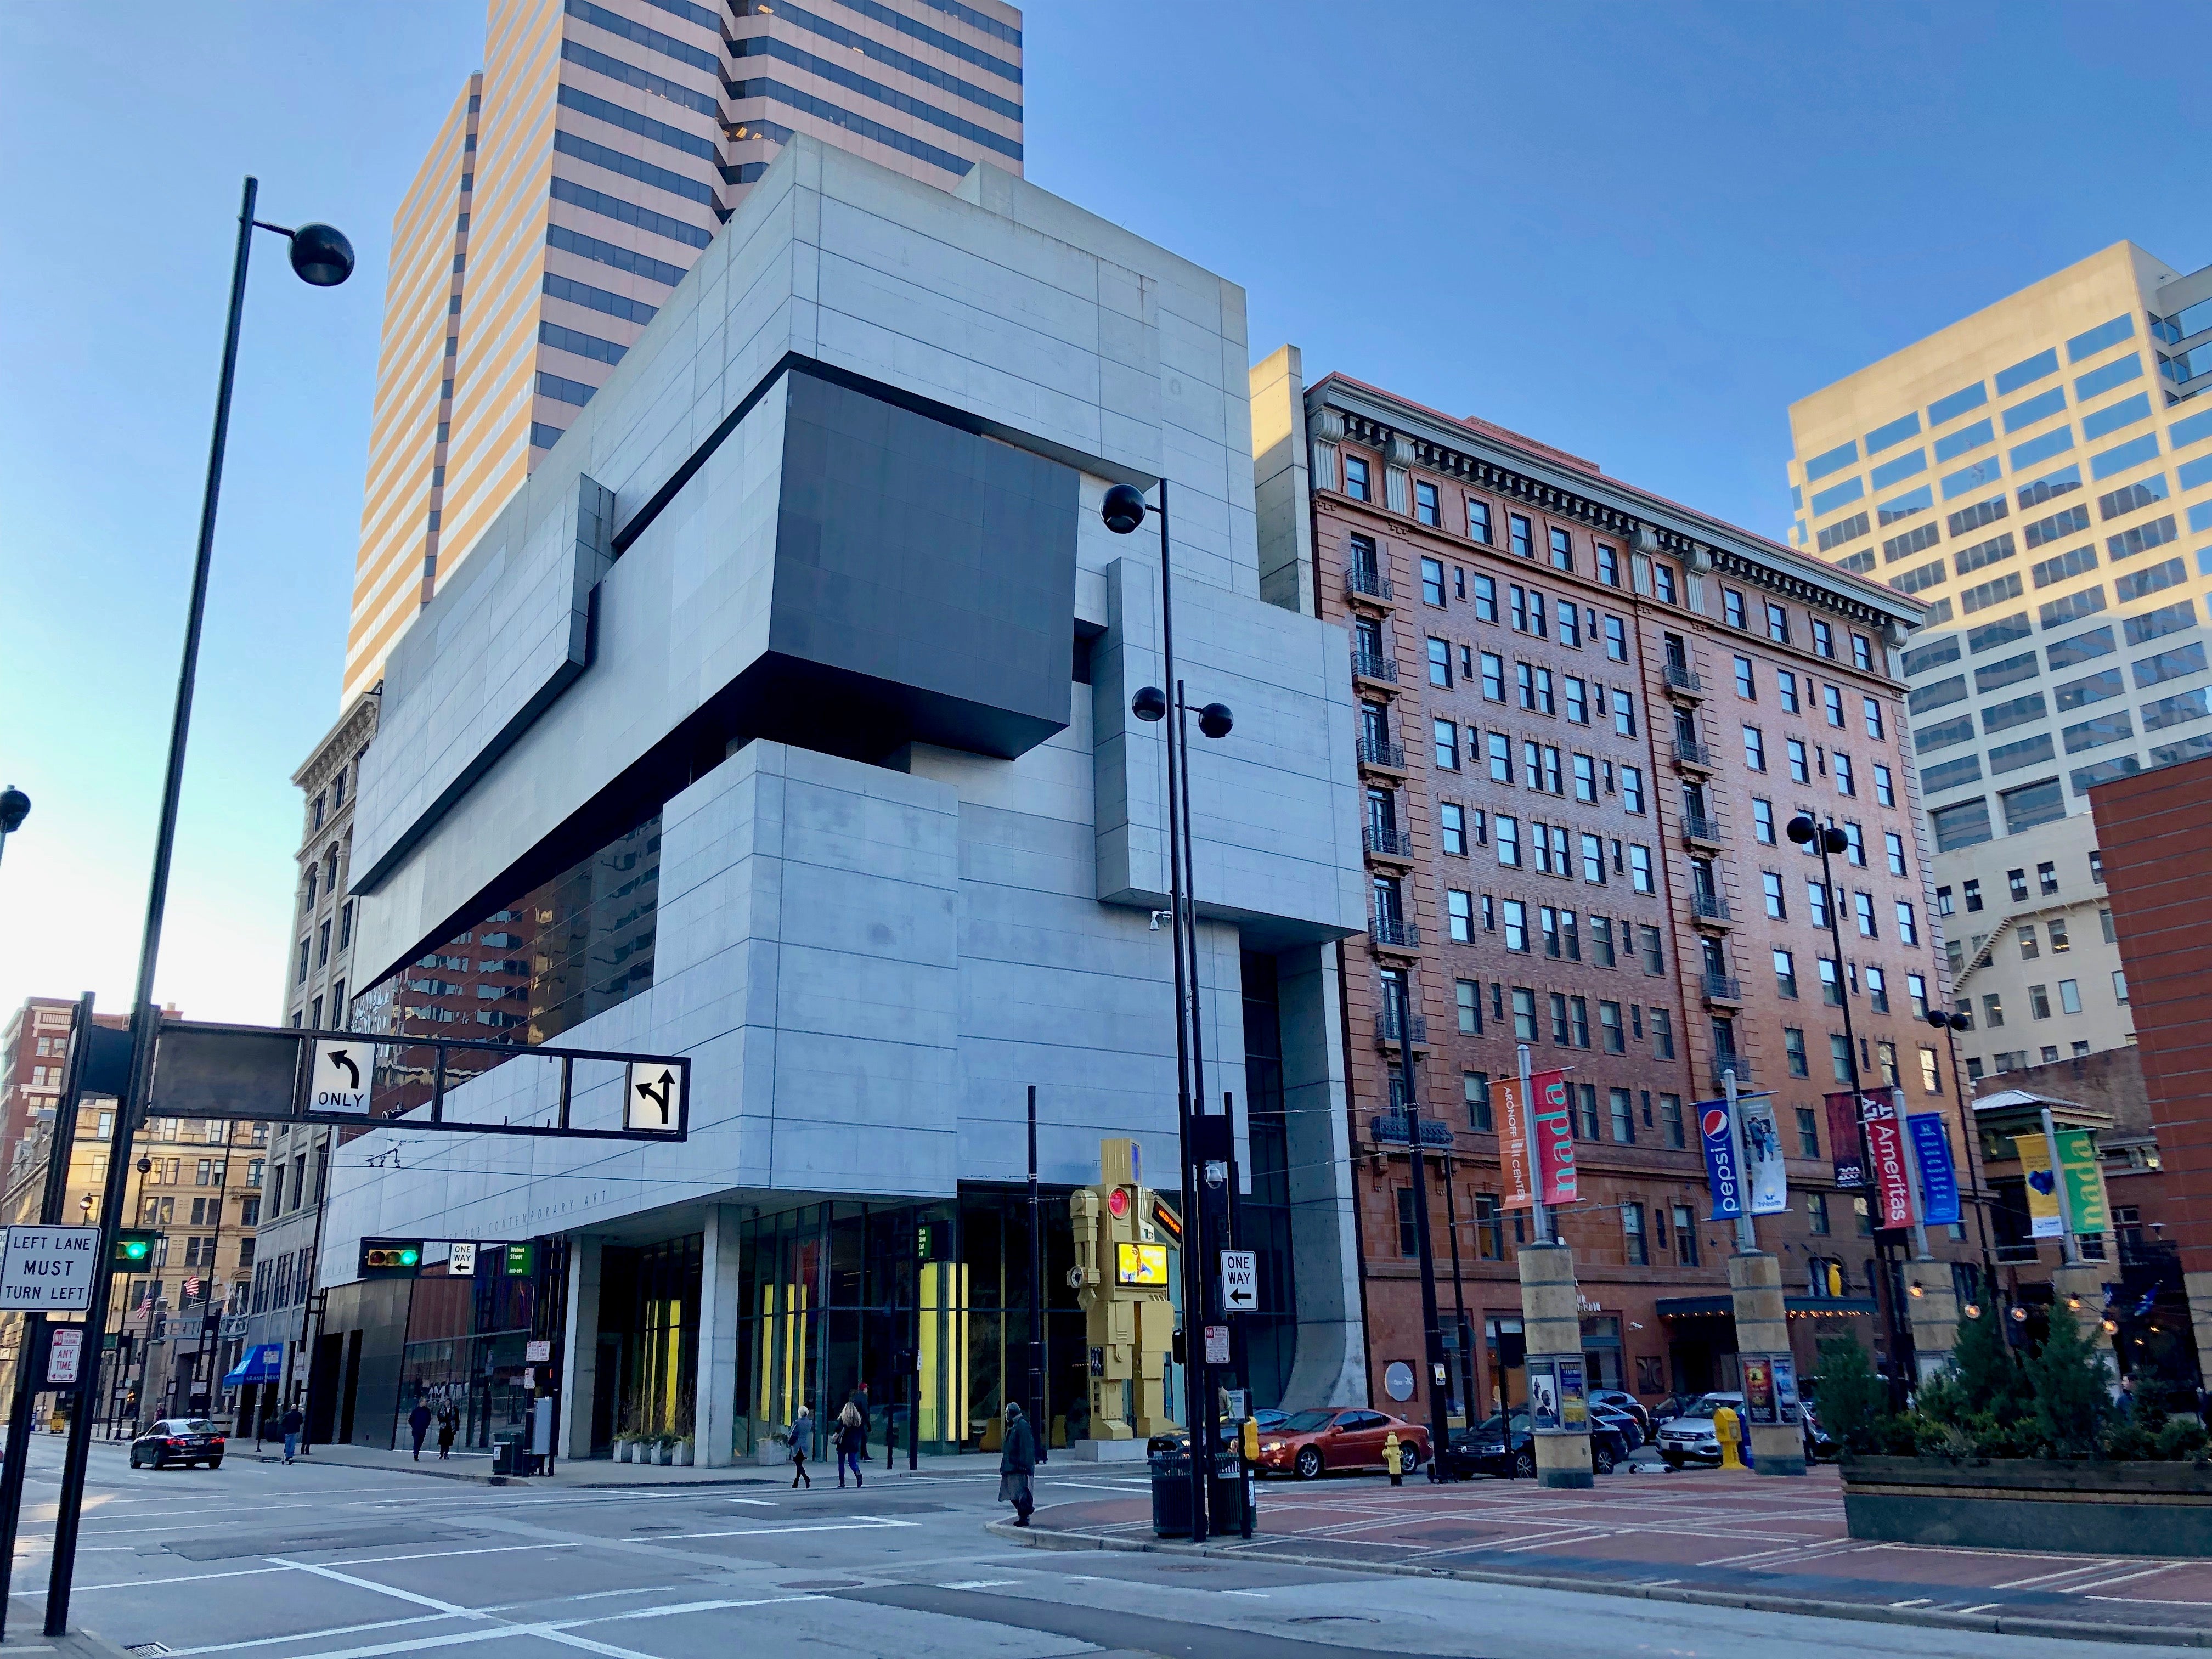 Contemporary Art Center Cincinnati, Ohio USA